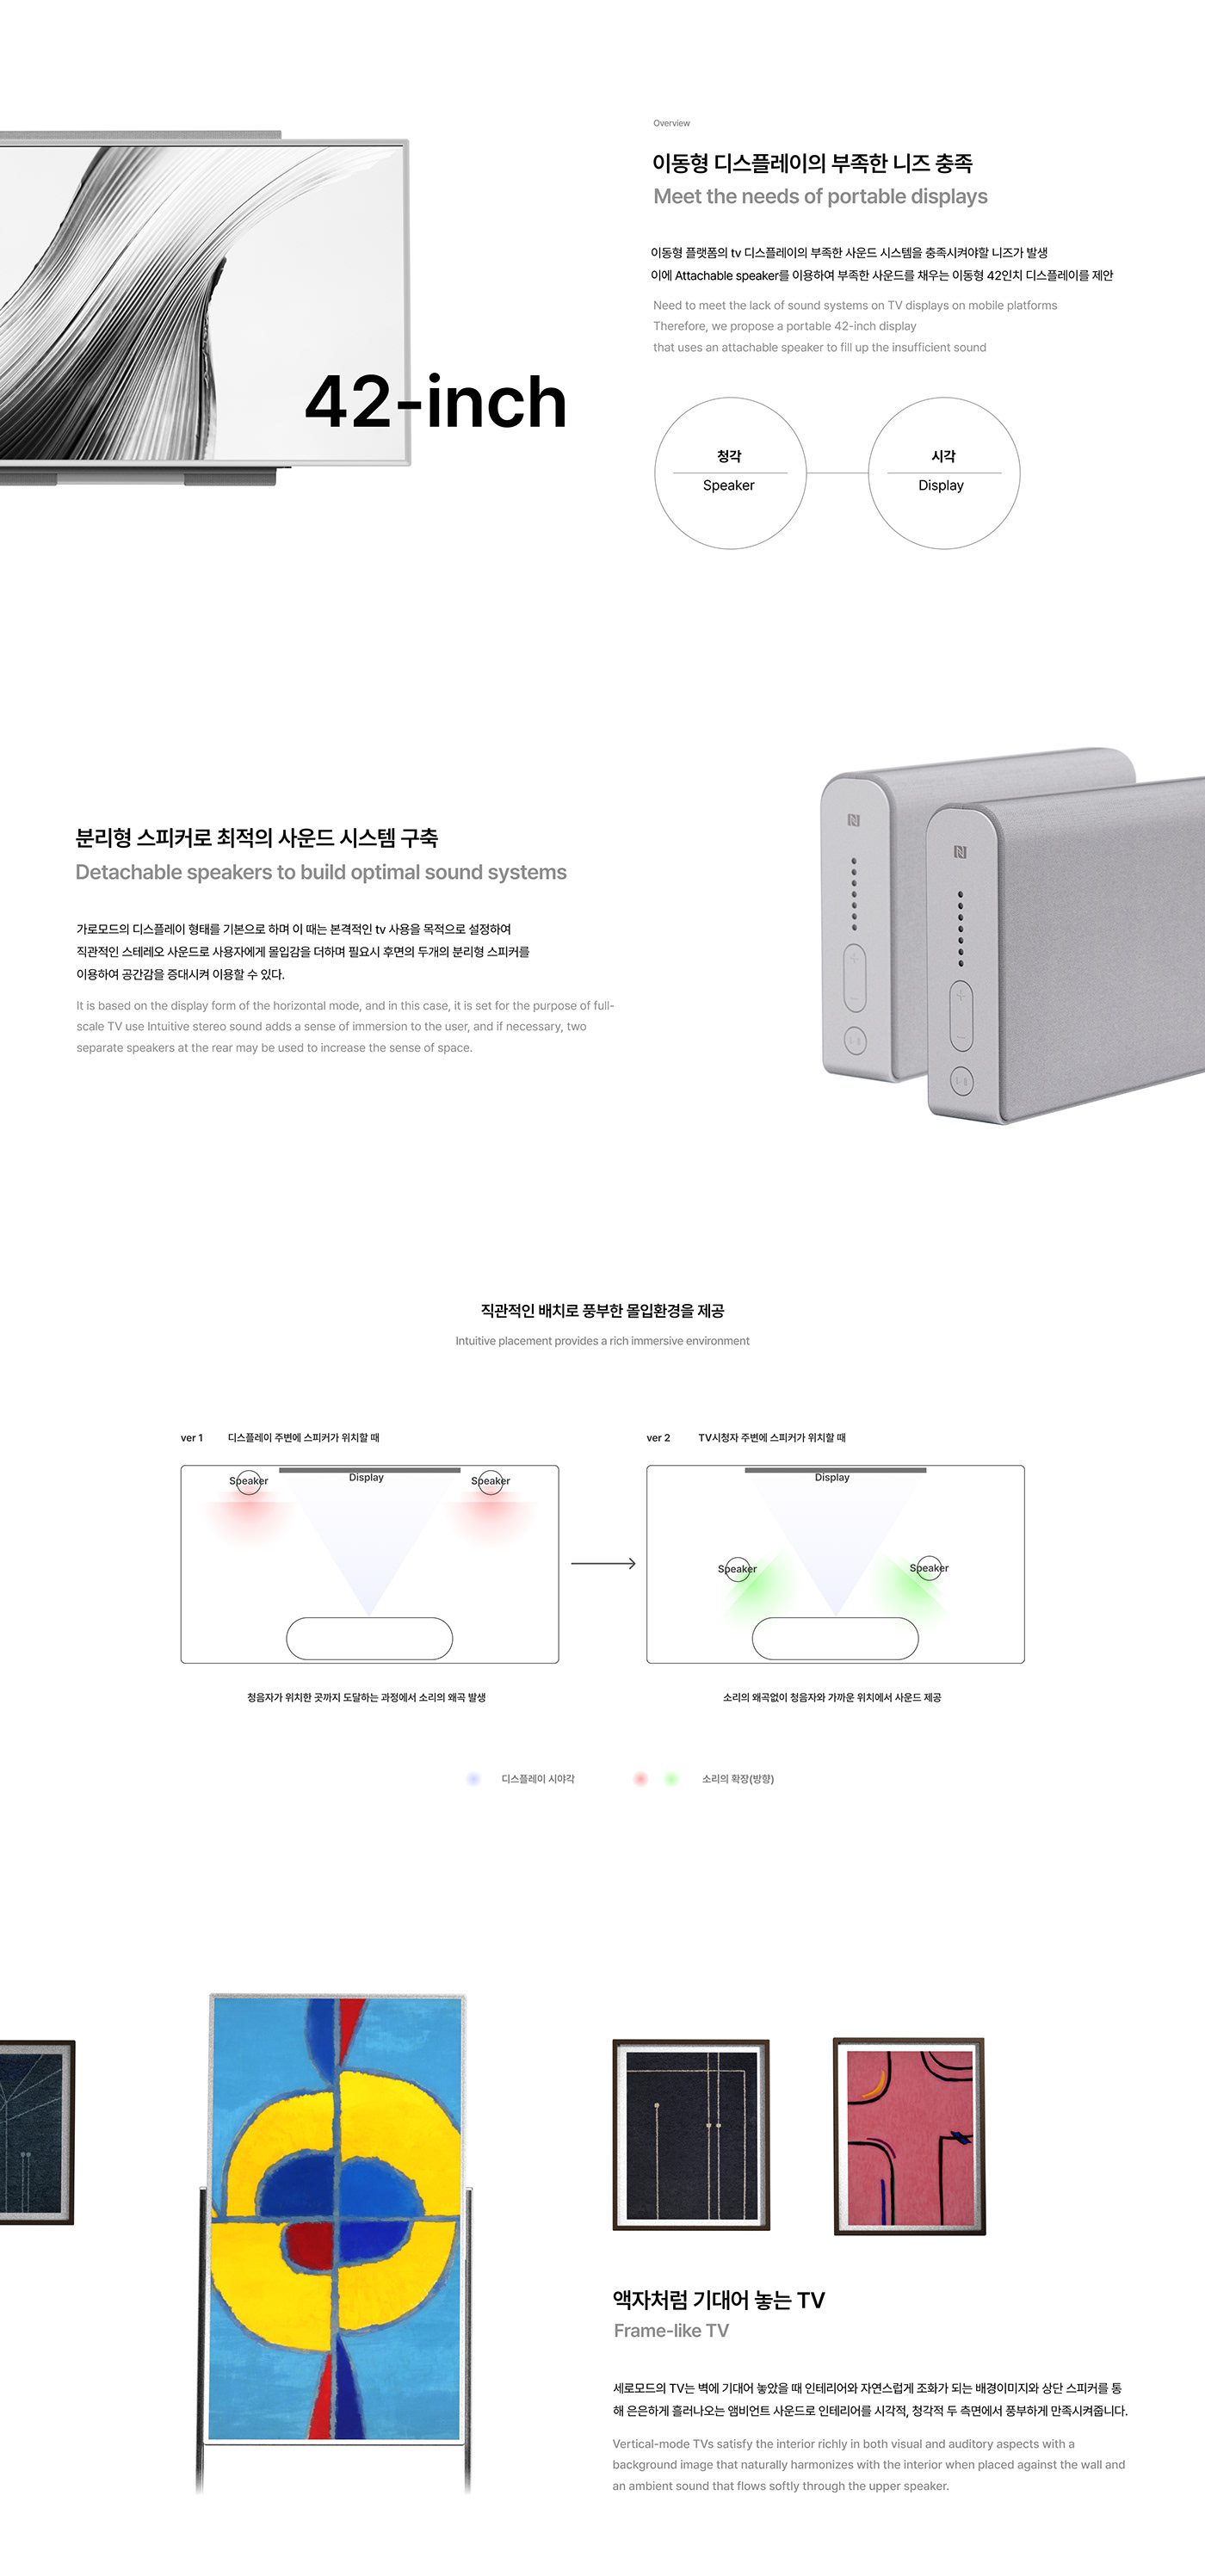 KDM+ Korea Design Membership design Display duality industrial design  interior design  product design  speaker lg